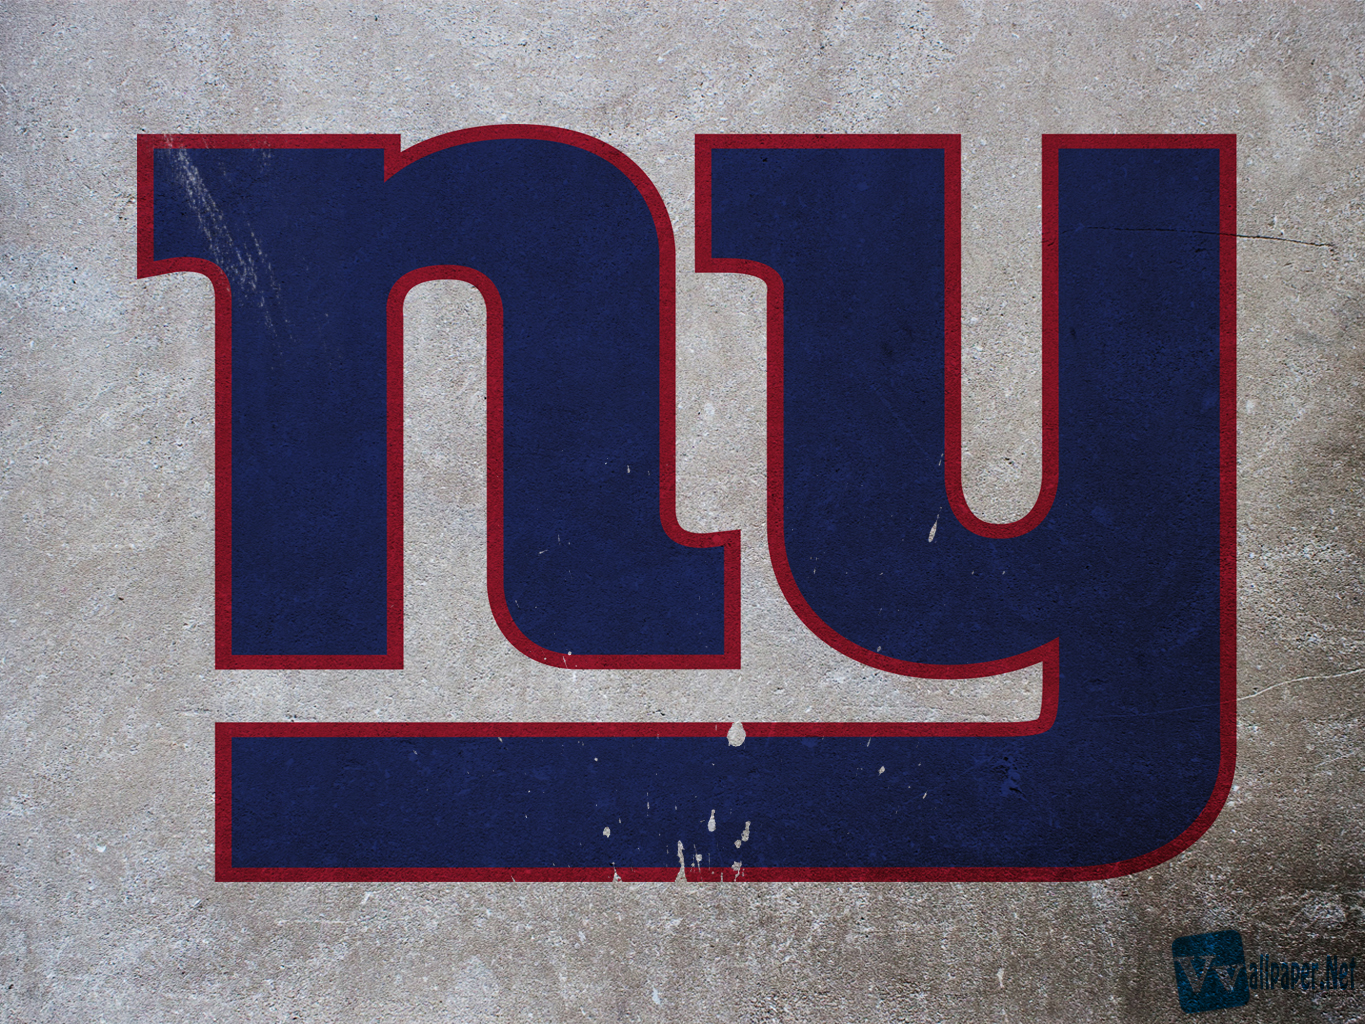 New York Giants Logo Helmet HD Wallpaper Background